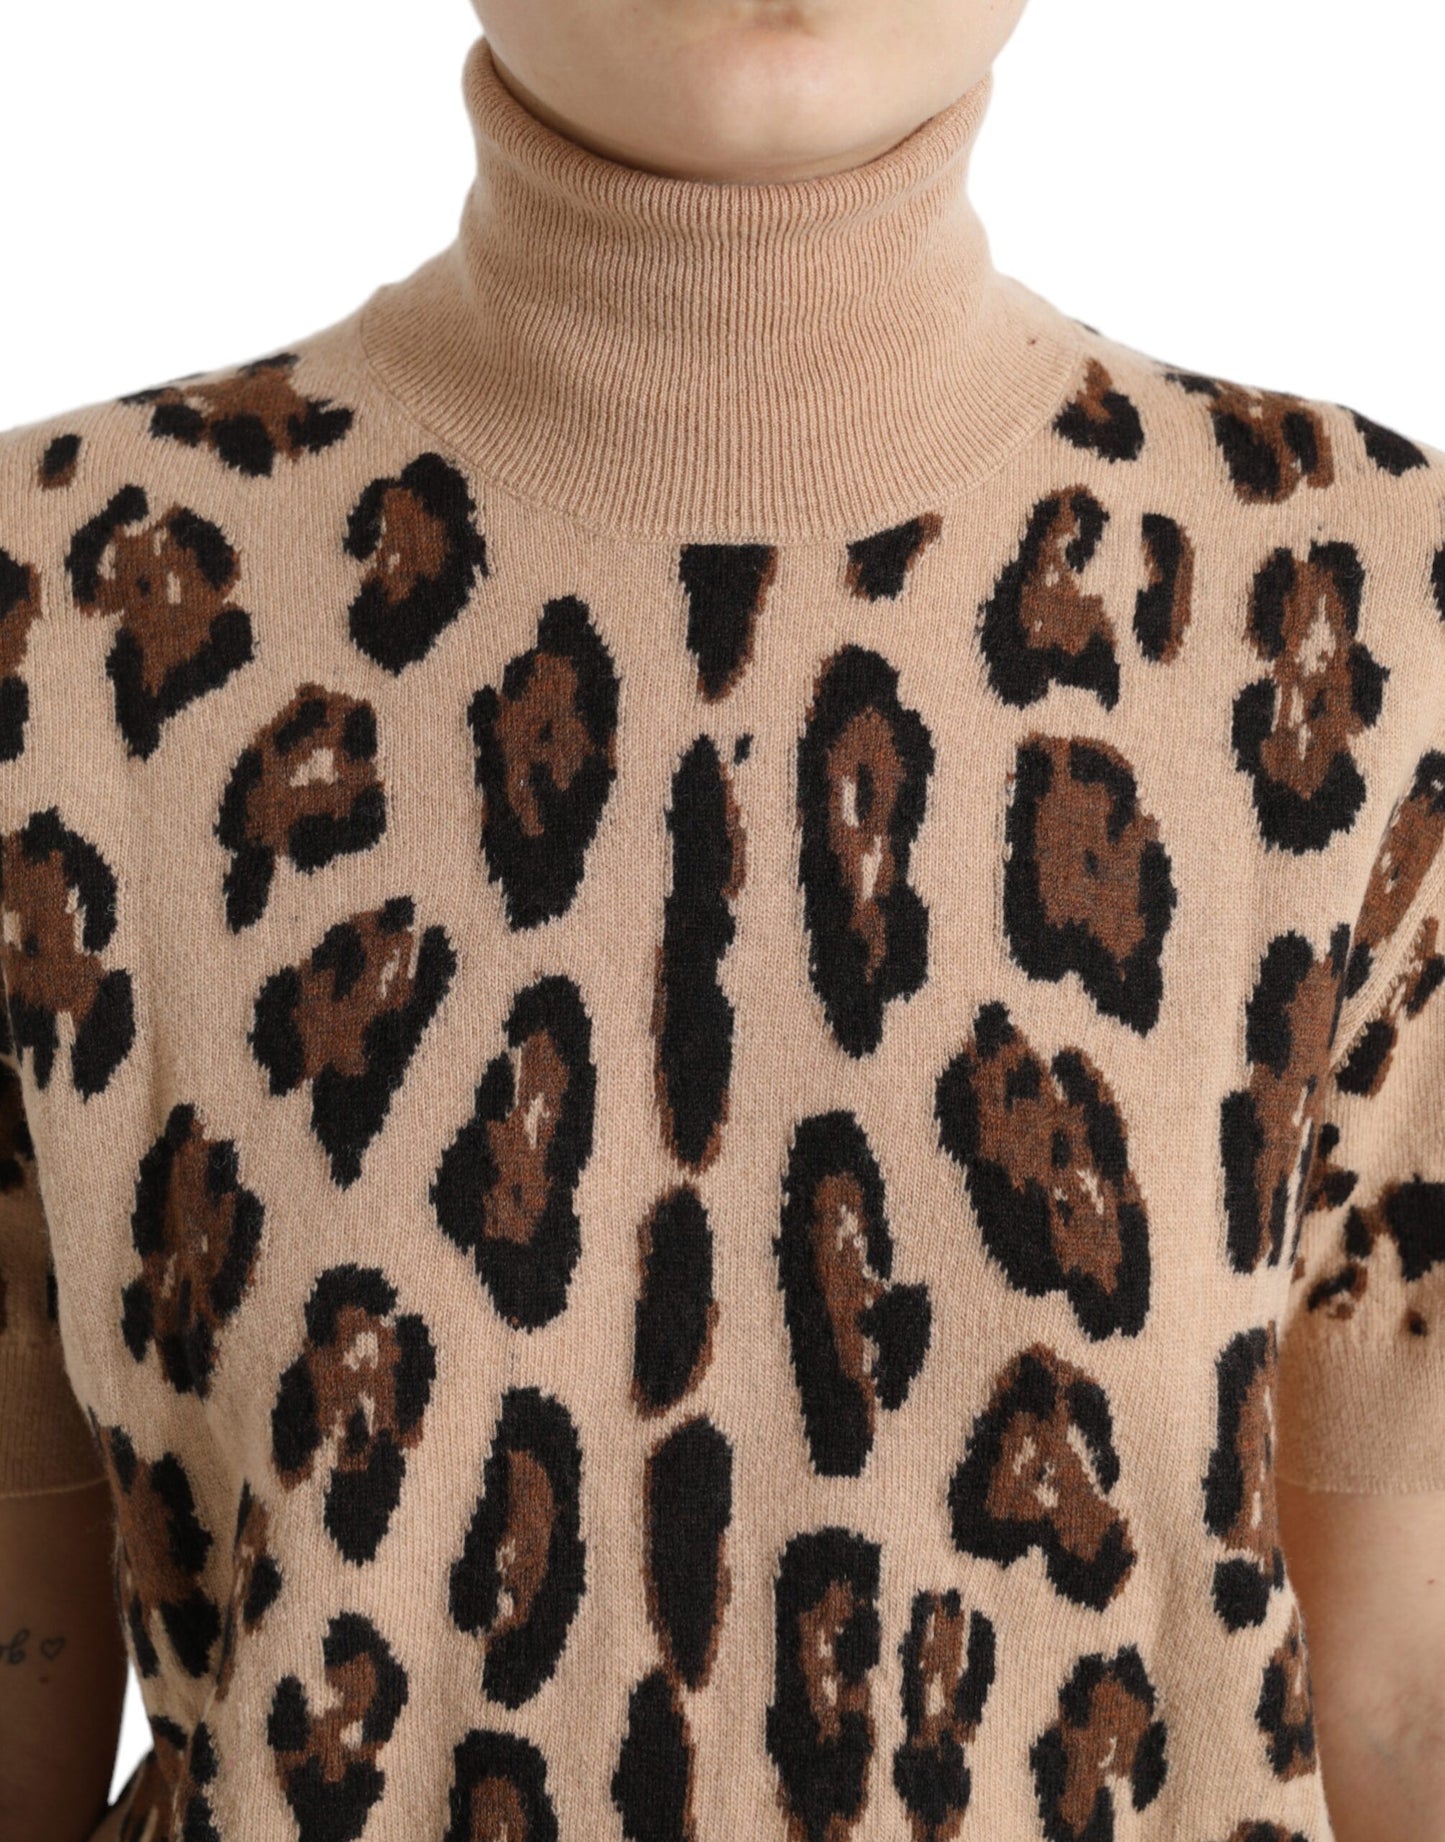 Elegant Beige Leopard Turtleneck Wool Top